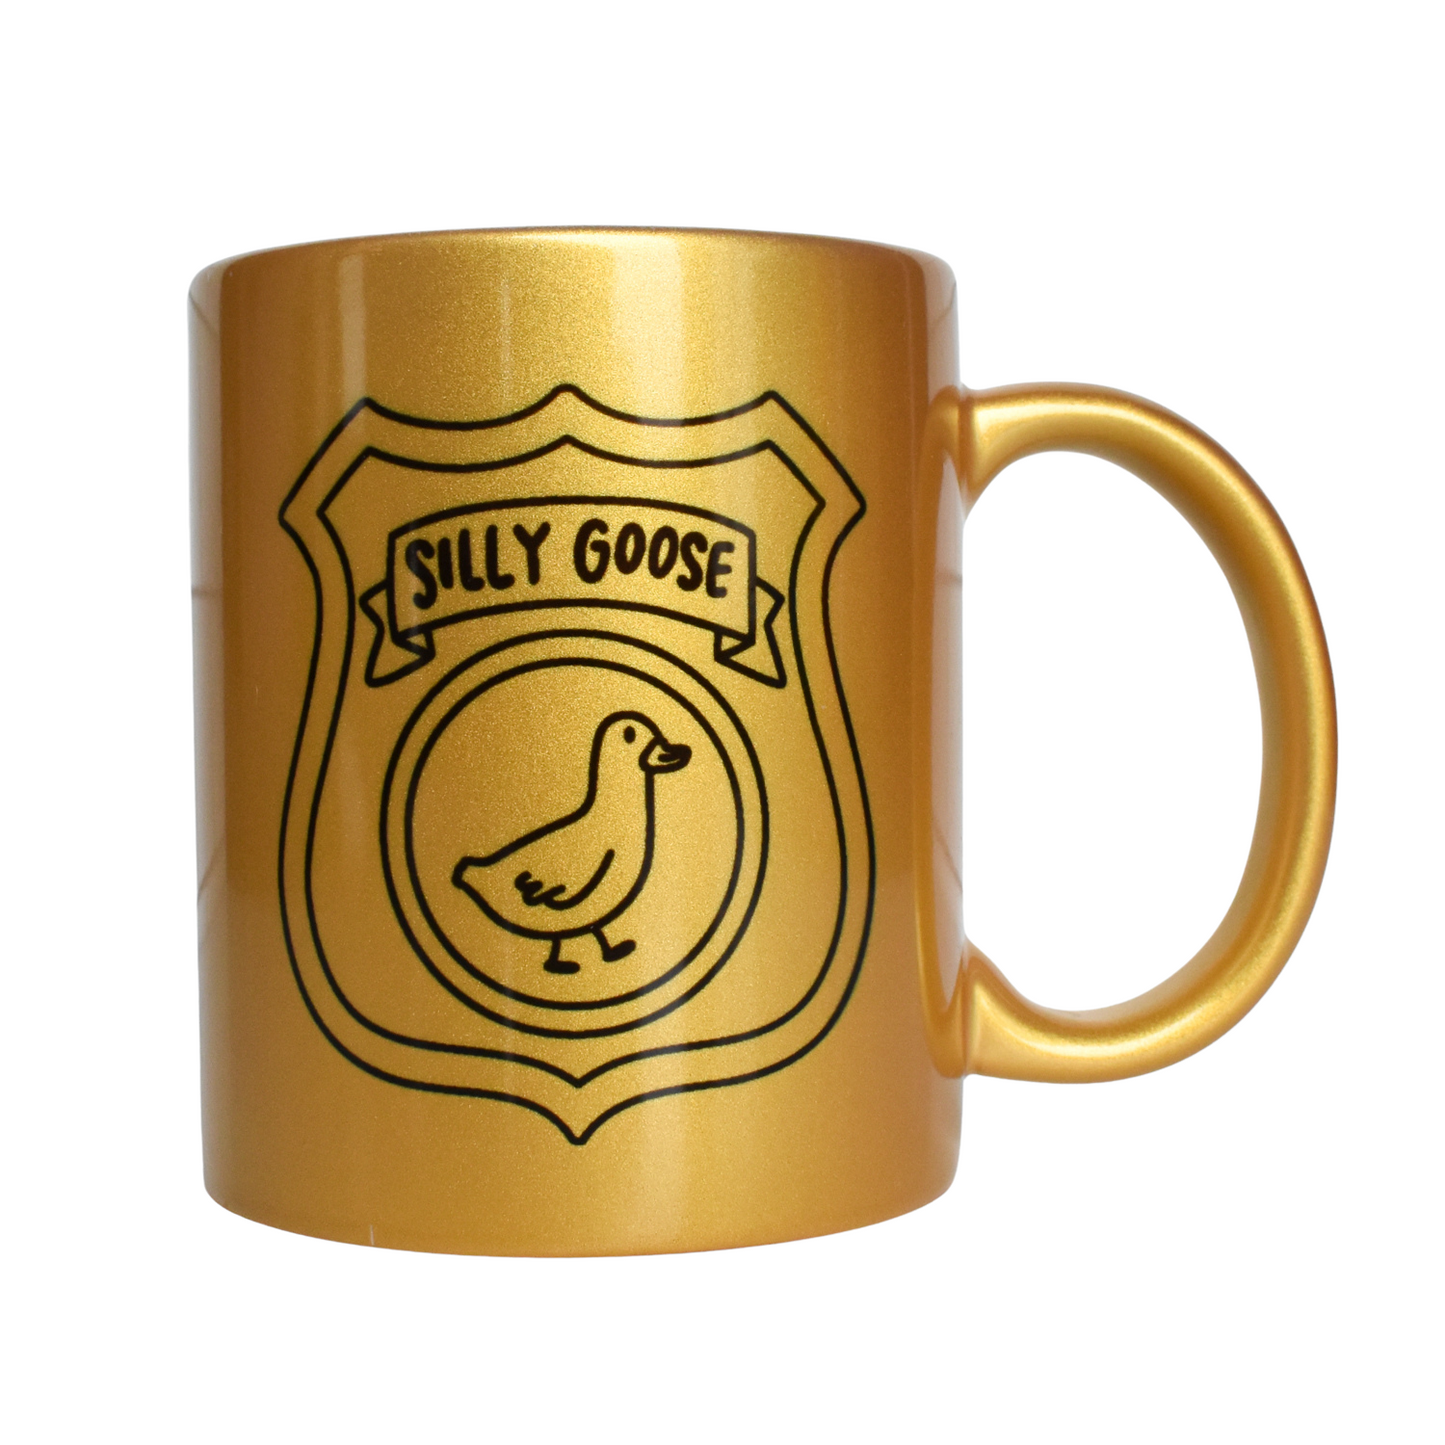 Silly Goose Badge Mug